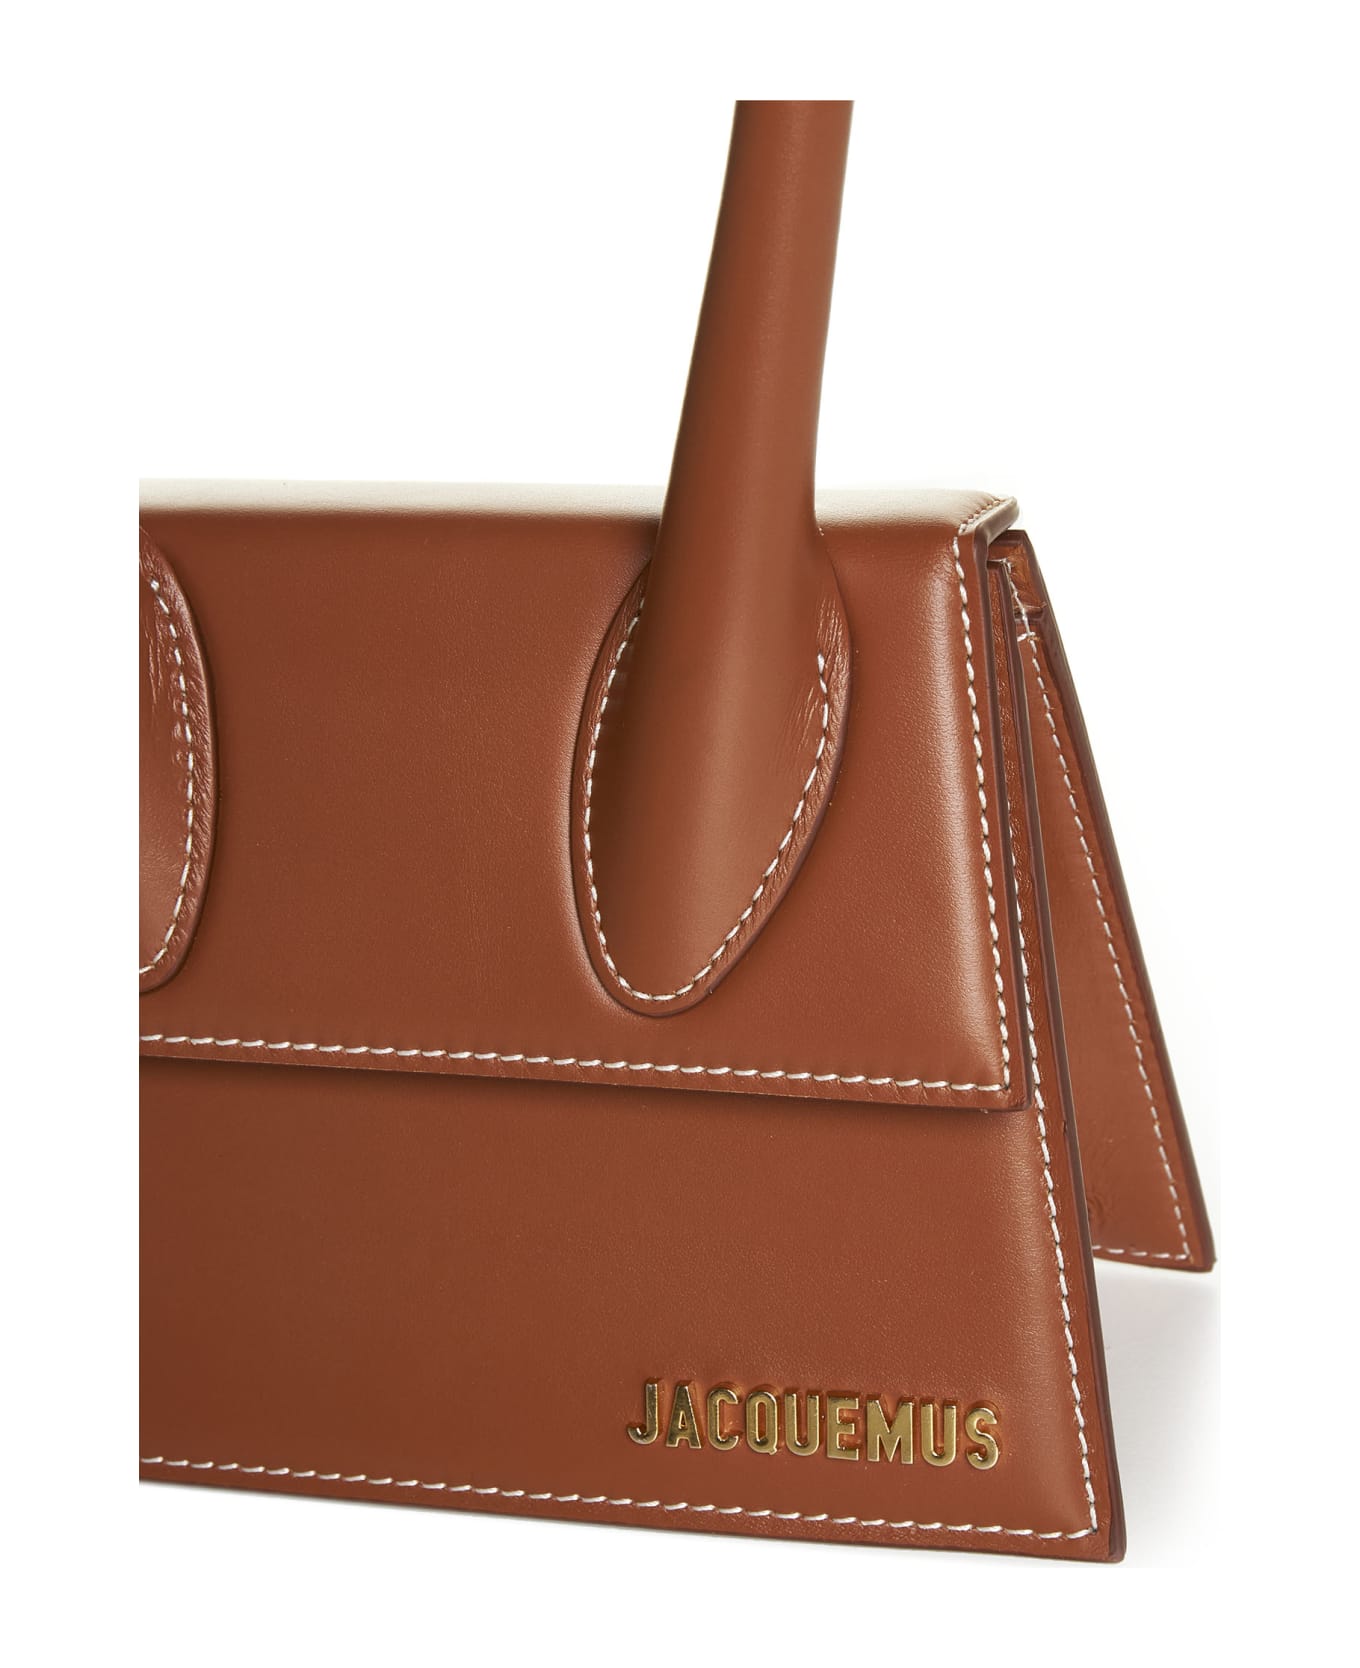 Jacquemus Le Chiquito Moyen Bag - Light brown